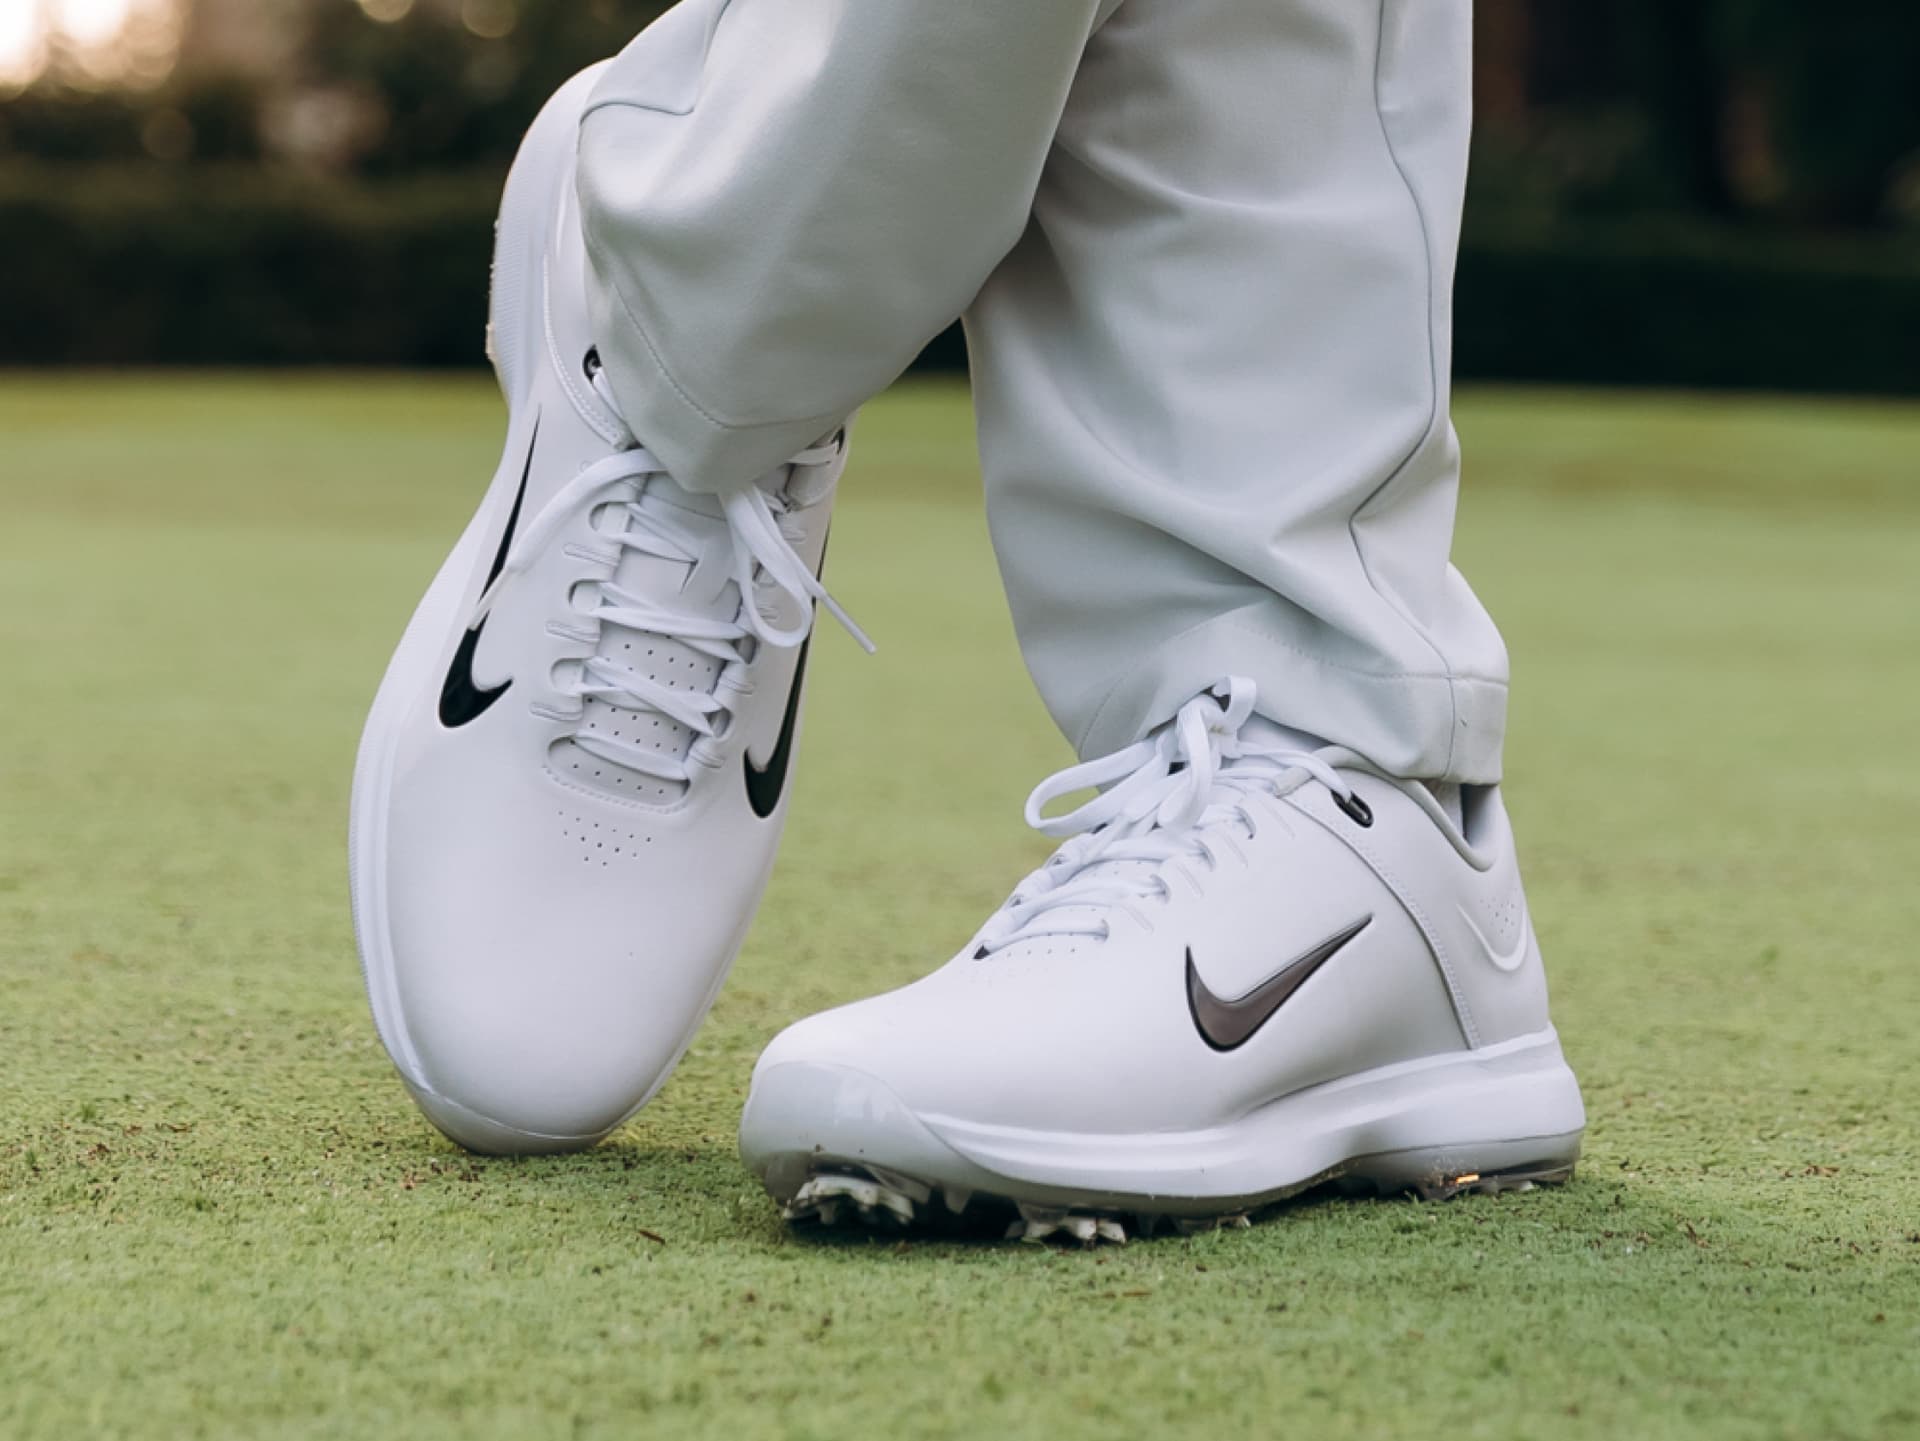 Zin Overtollig richting Nike Golf. Nike.com